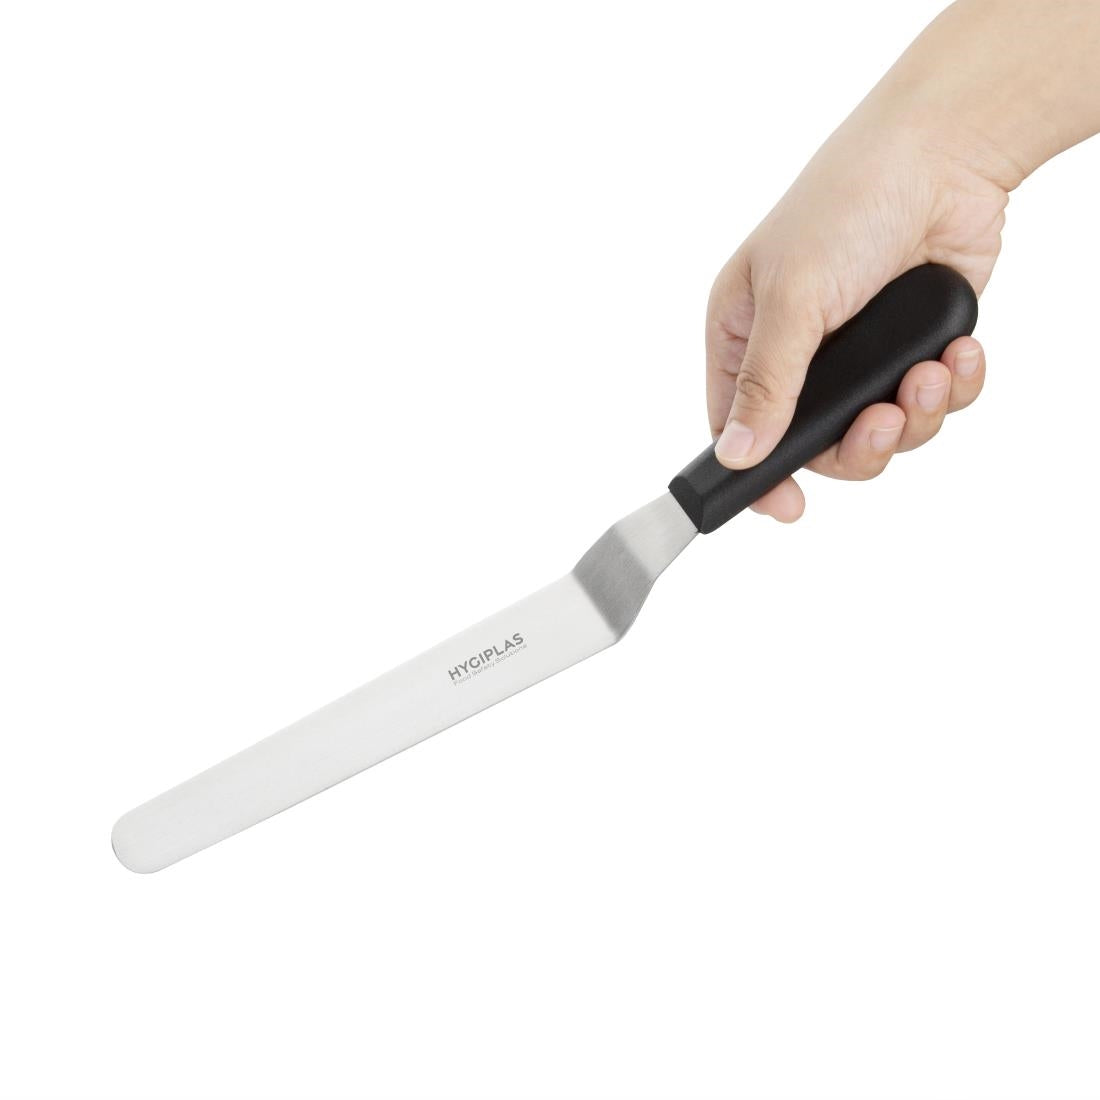 D410 Hygiplas Angled Blade Palette Knife Black 19cm JD Catering Equipment Solutions Ltd